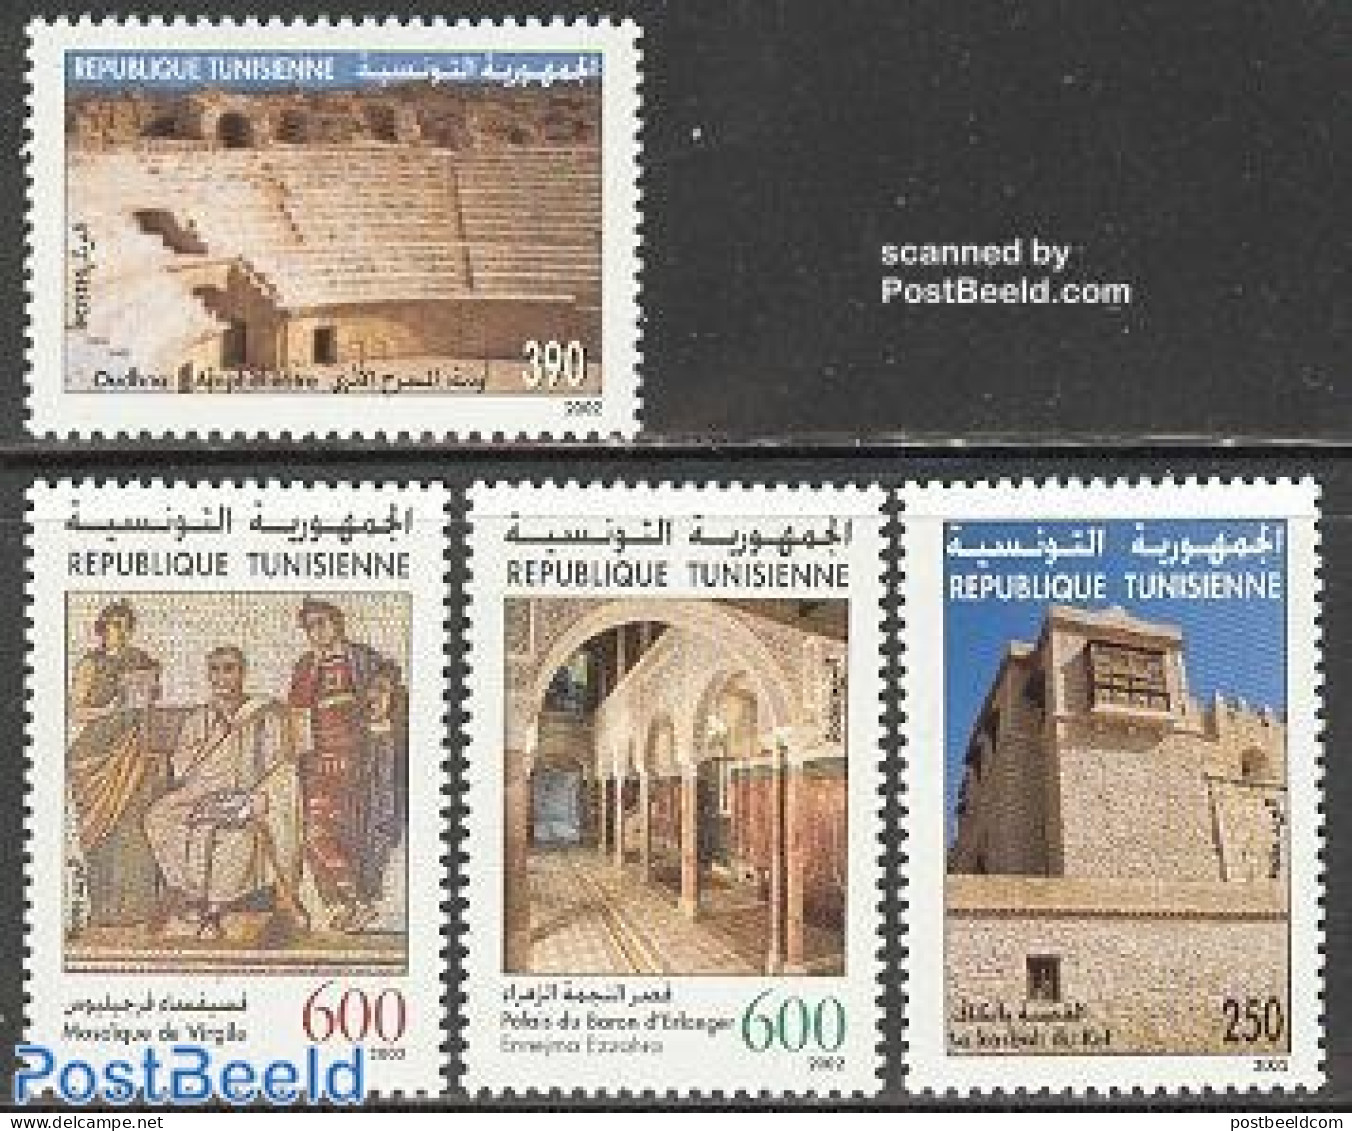 Tunisia 2002 Archaeology 4v, Mint NH, History - Archaeology - Archéologie